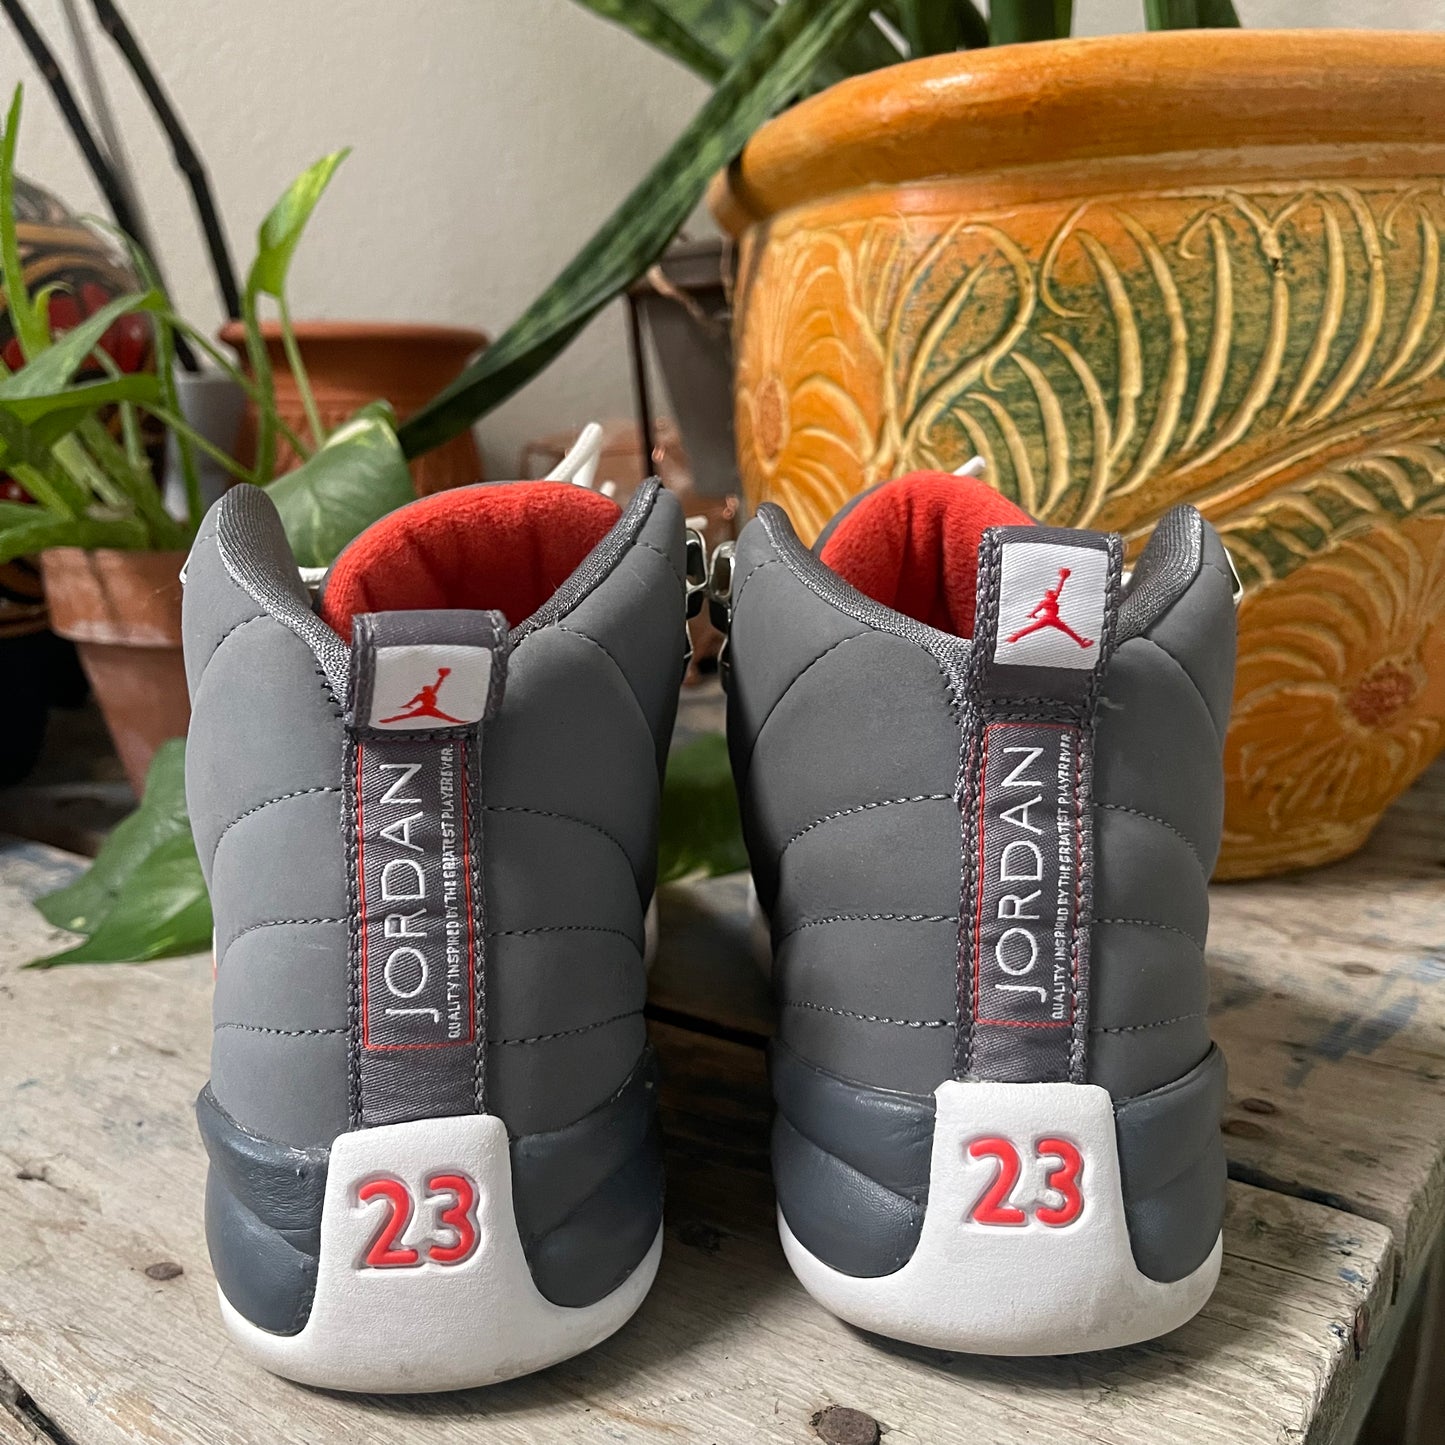 2012 Air Jordan 12 Retro “Cool Grey” size 5.5 Youth or Woman’s 7